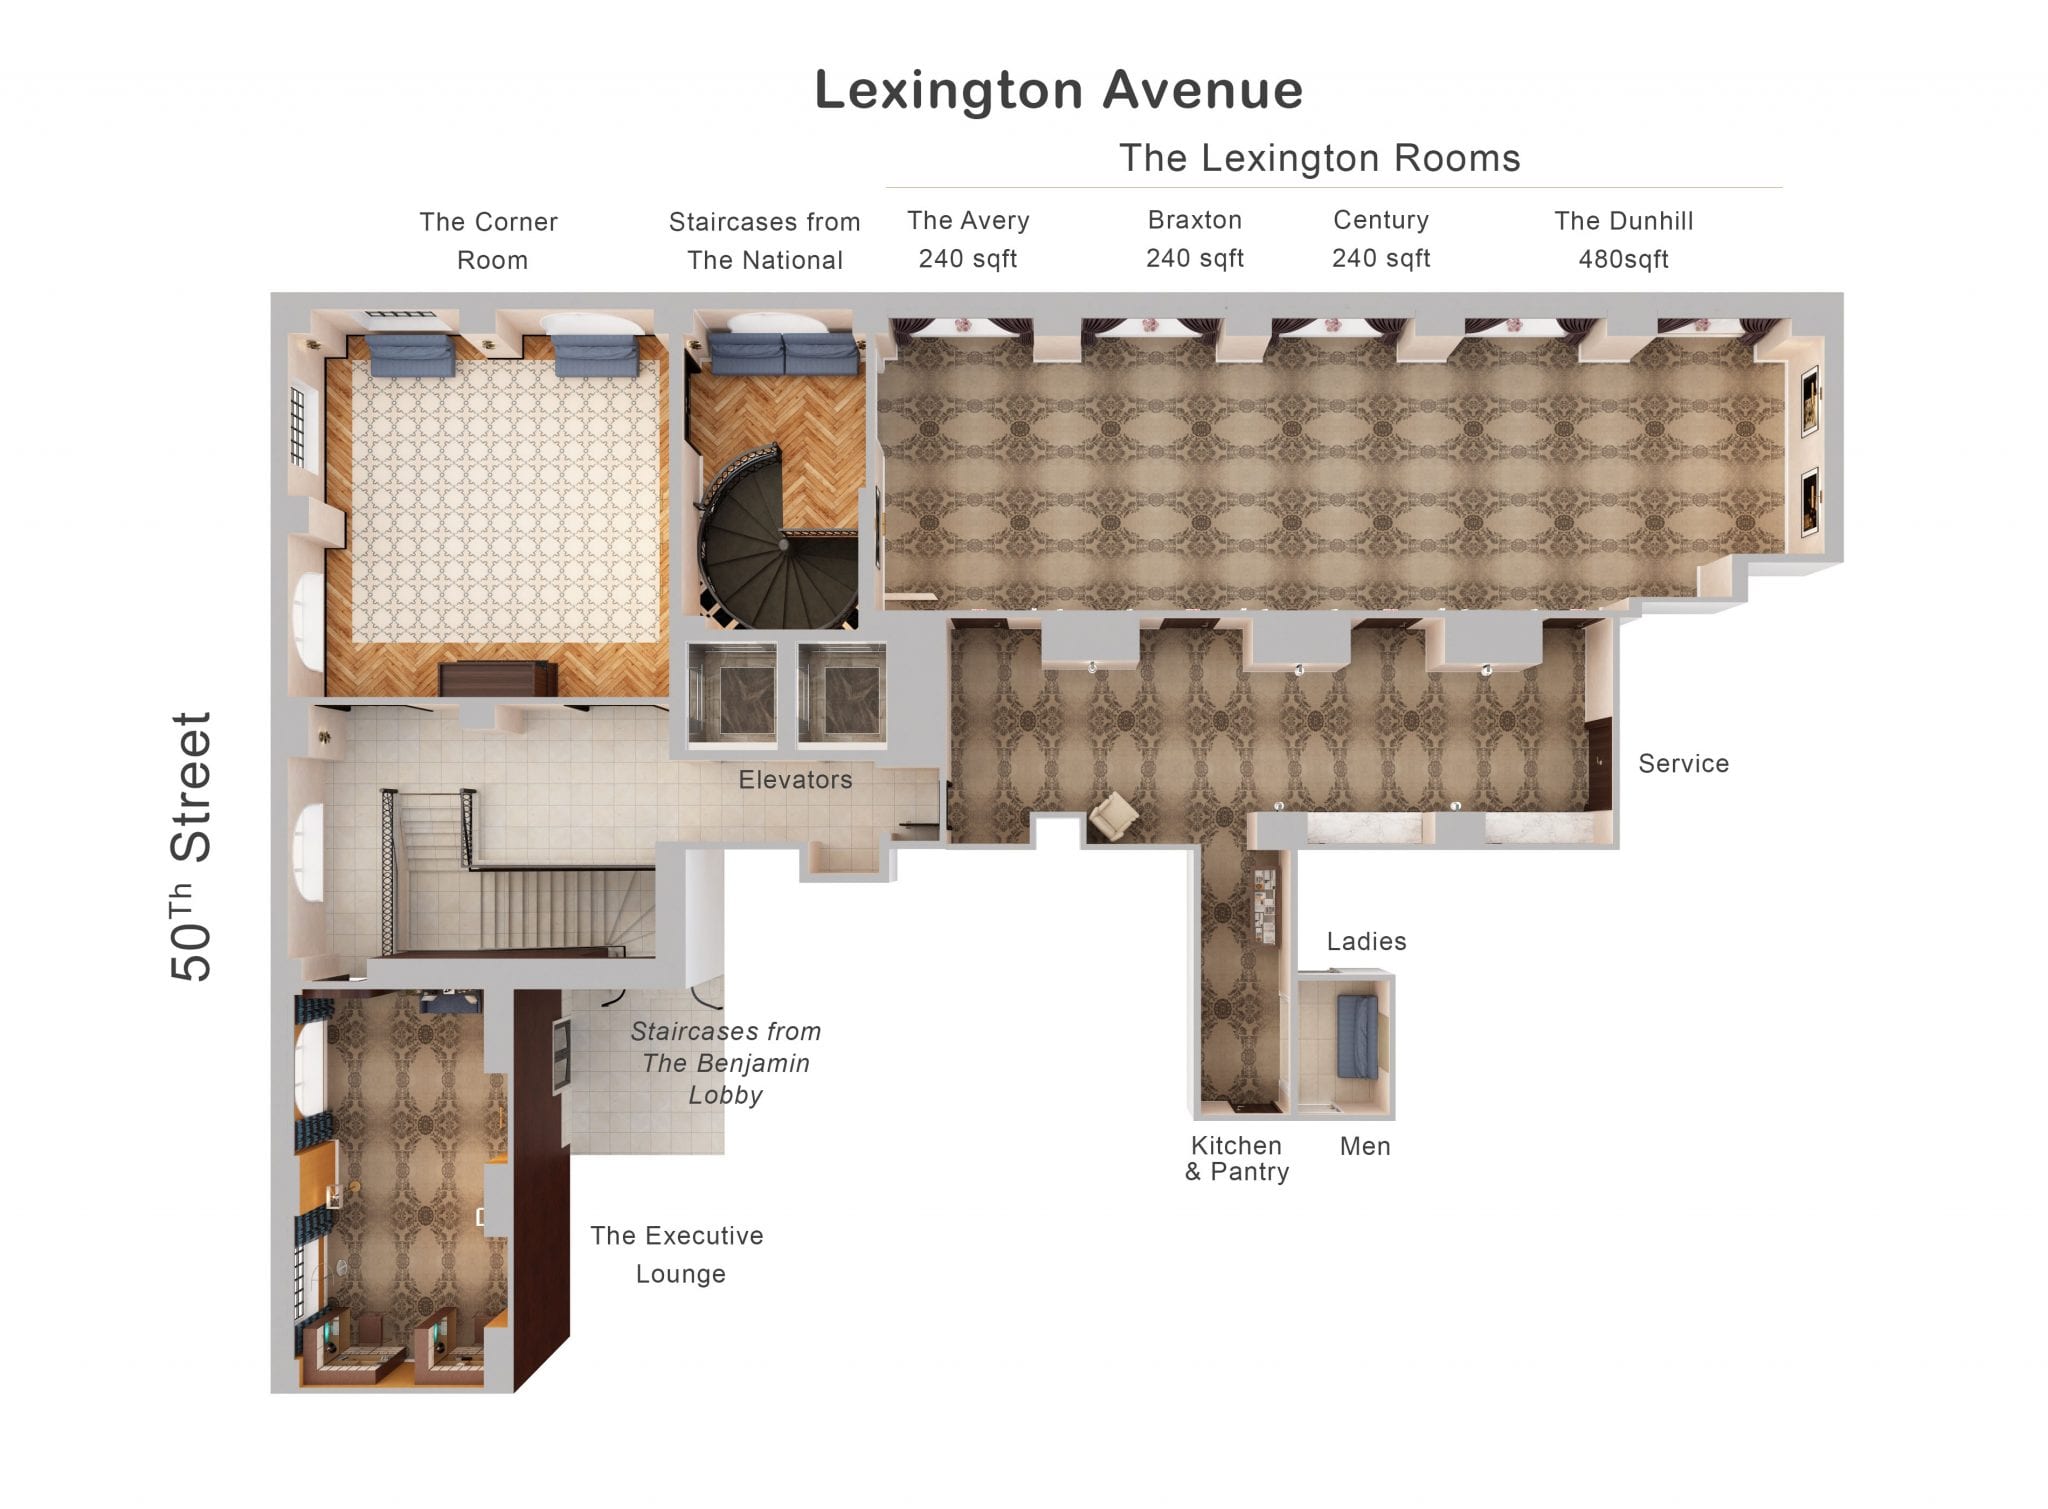 Equinox Private Dining Room Floor Plan